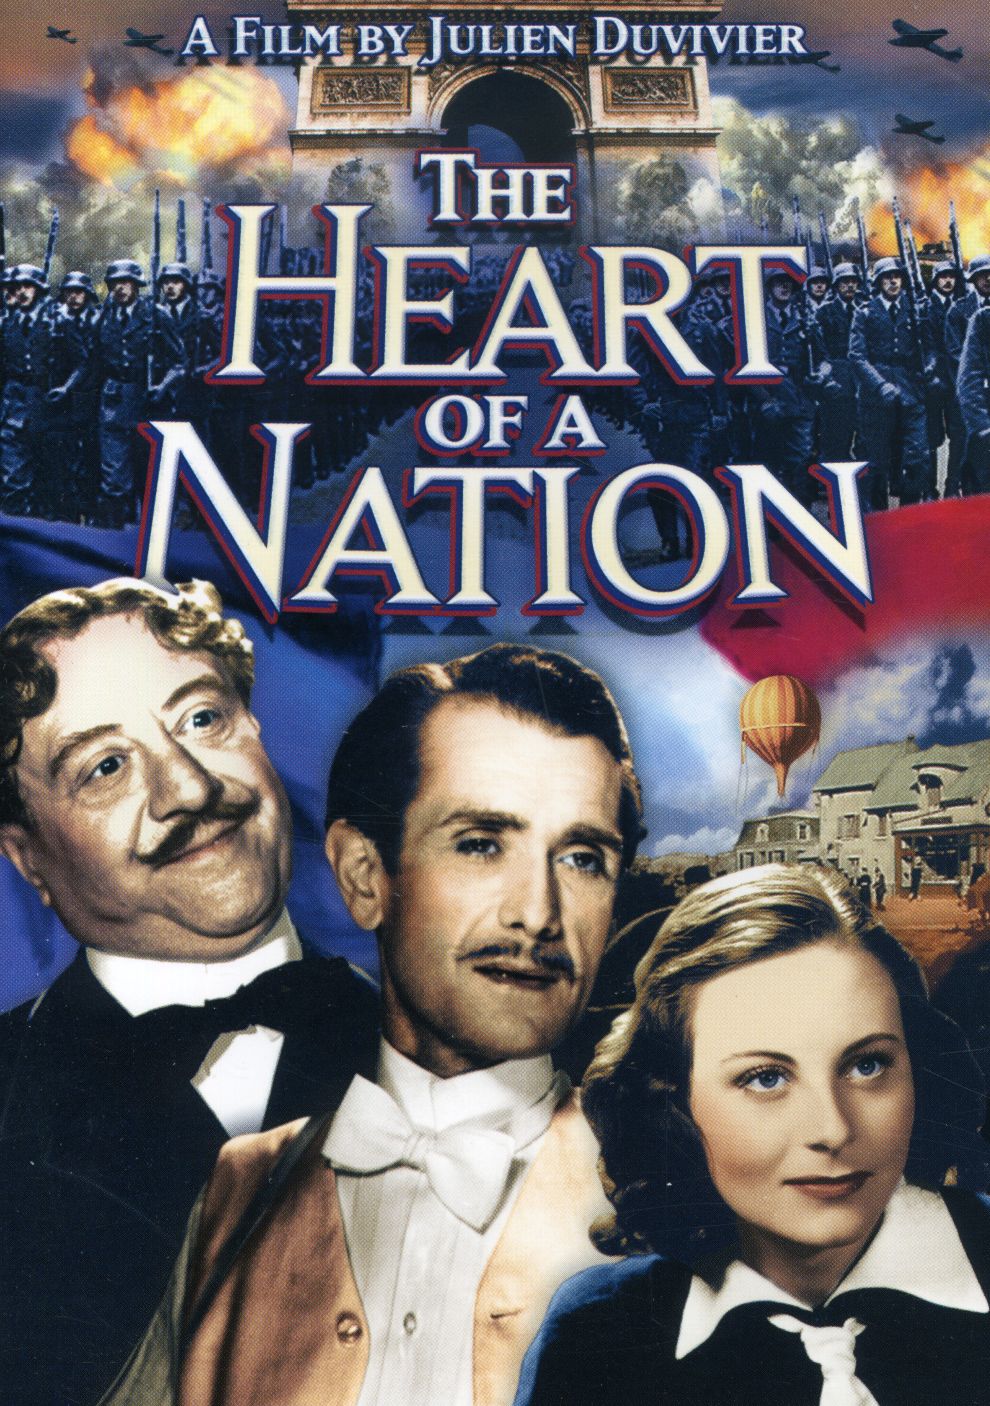 HEART OF A NATION / (B&W MOD)